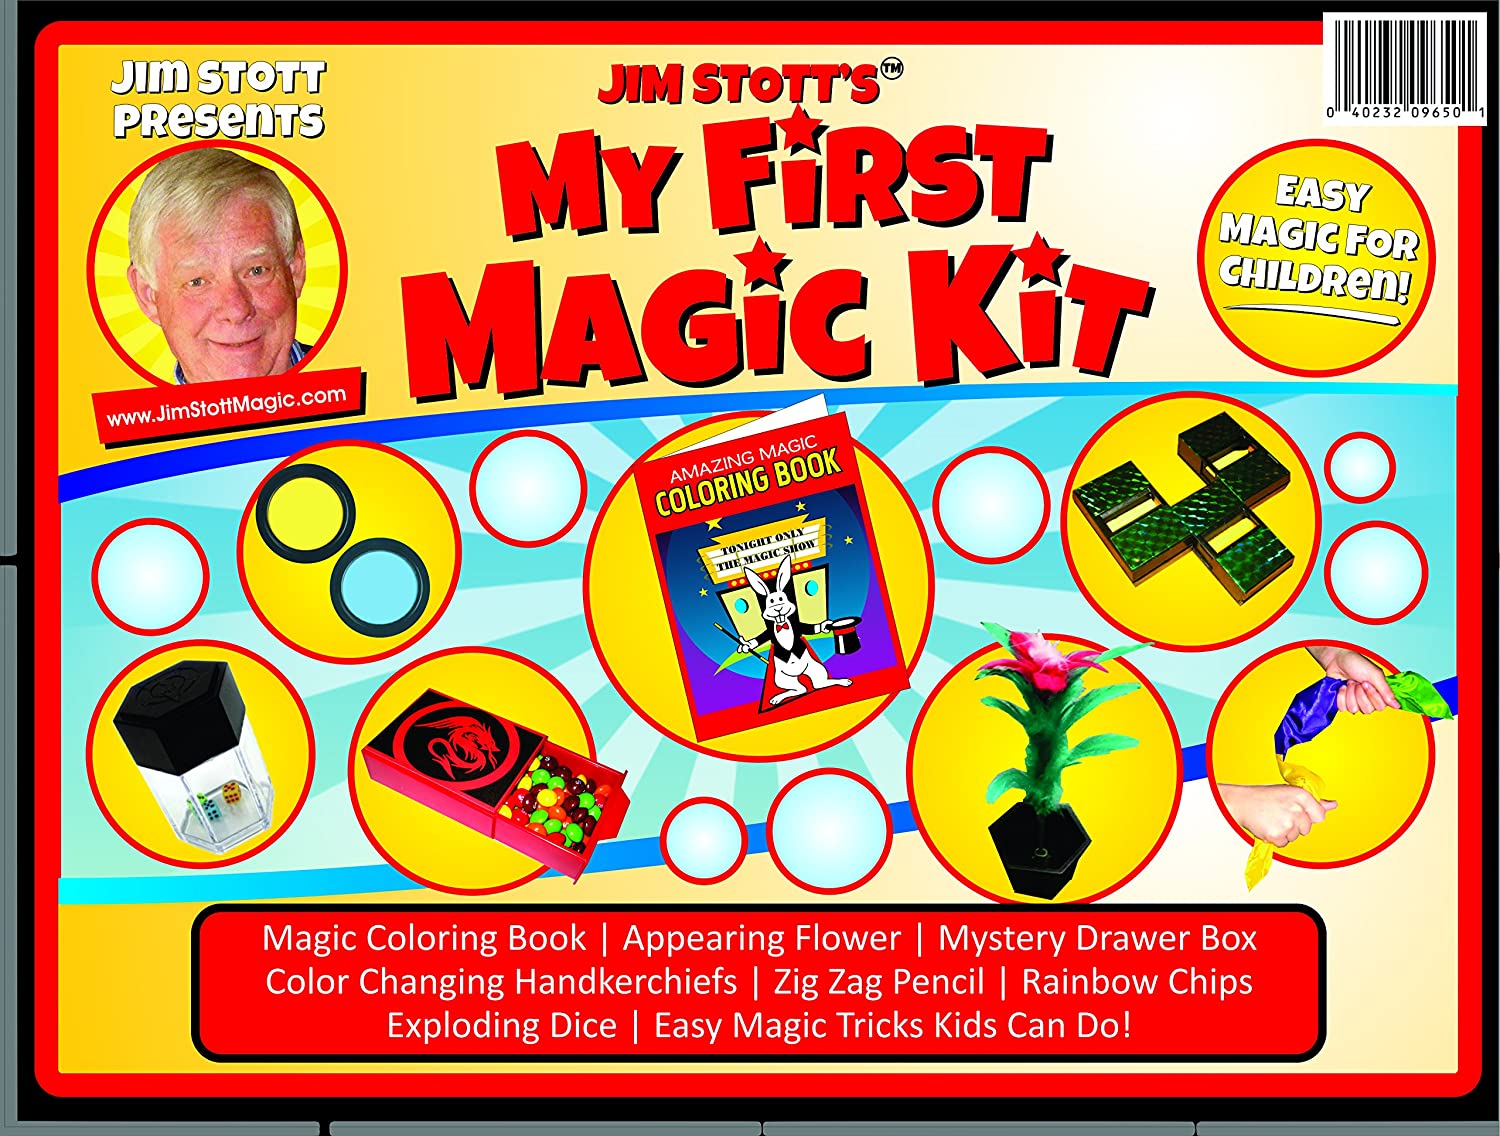 Jim Stott’s 'My First Magic Kit' for Kids